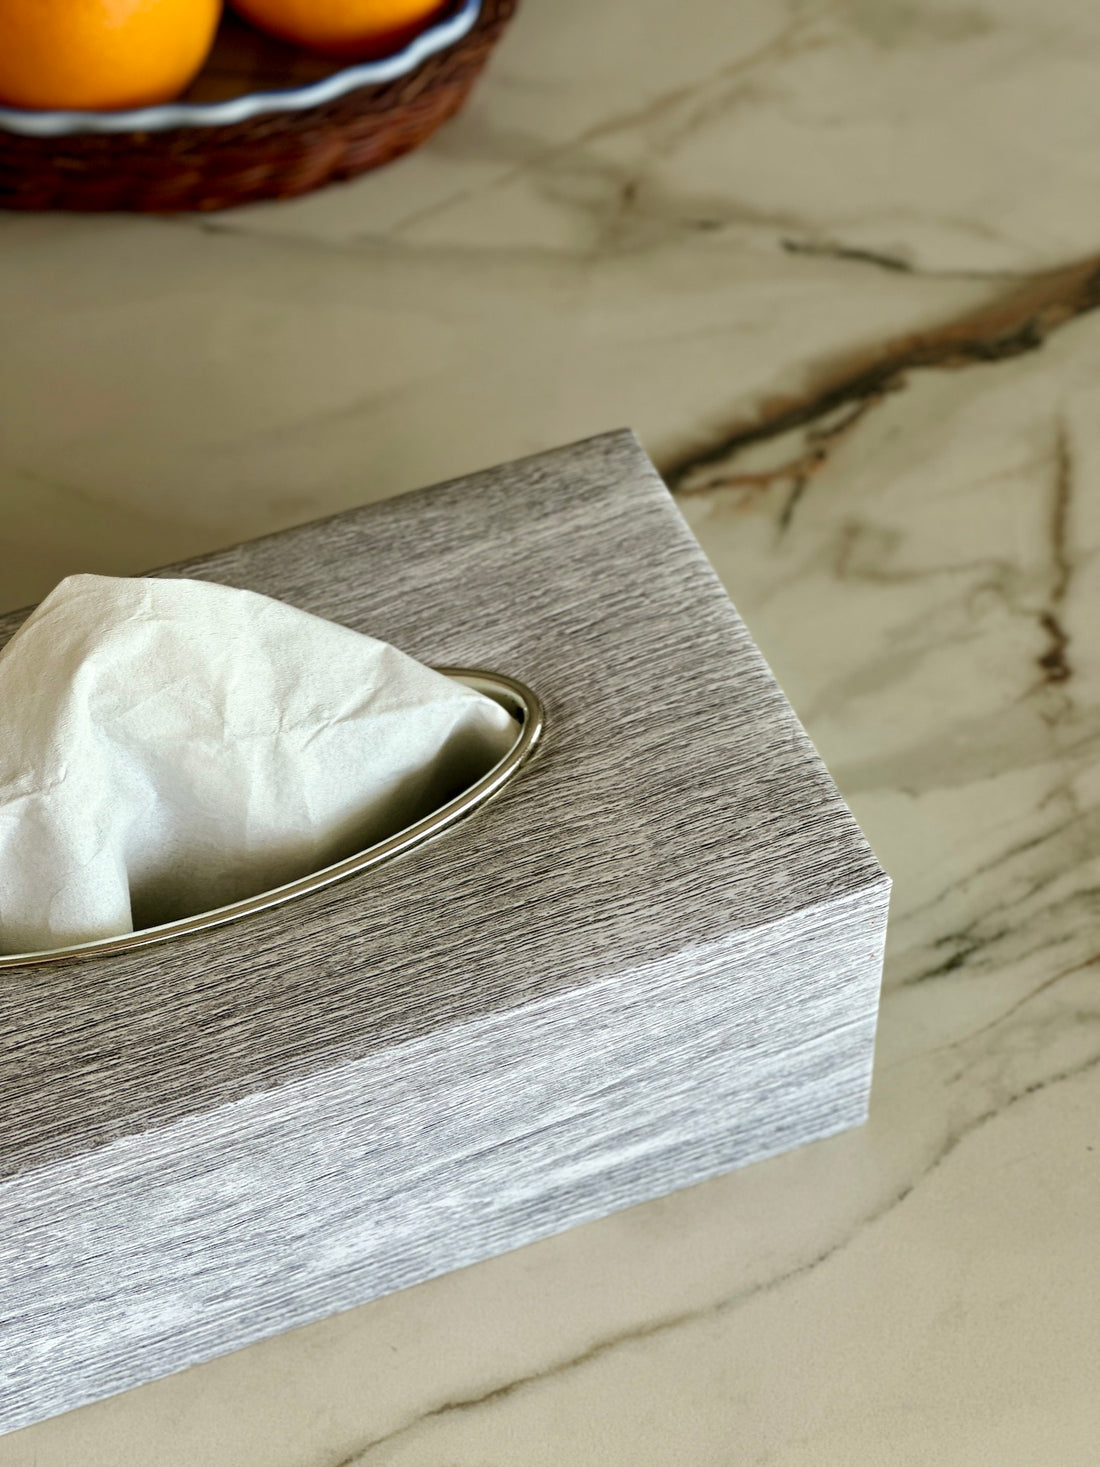 Tissue Box – Mason Home by Amarsons - Lifestyle & Decor